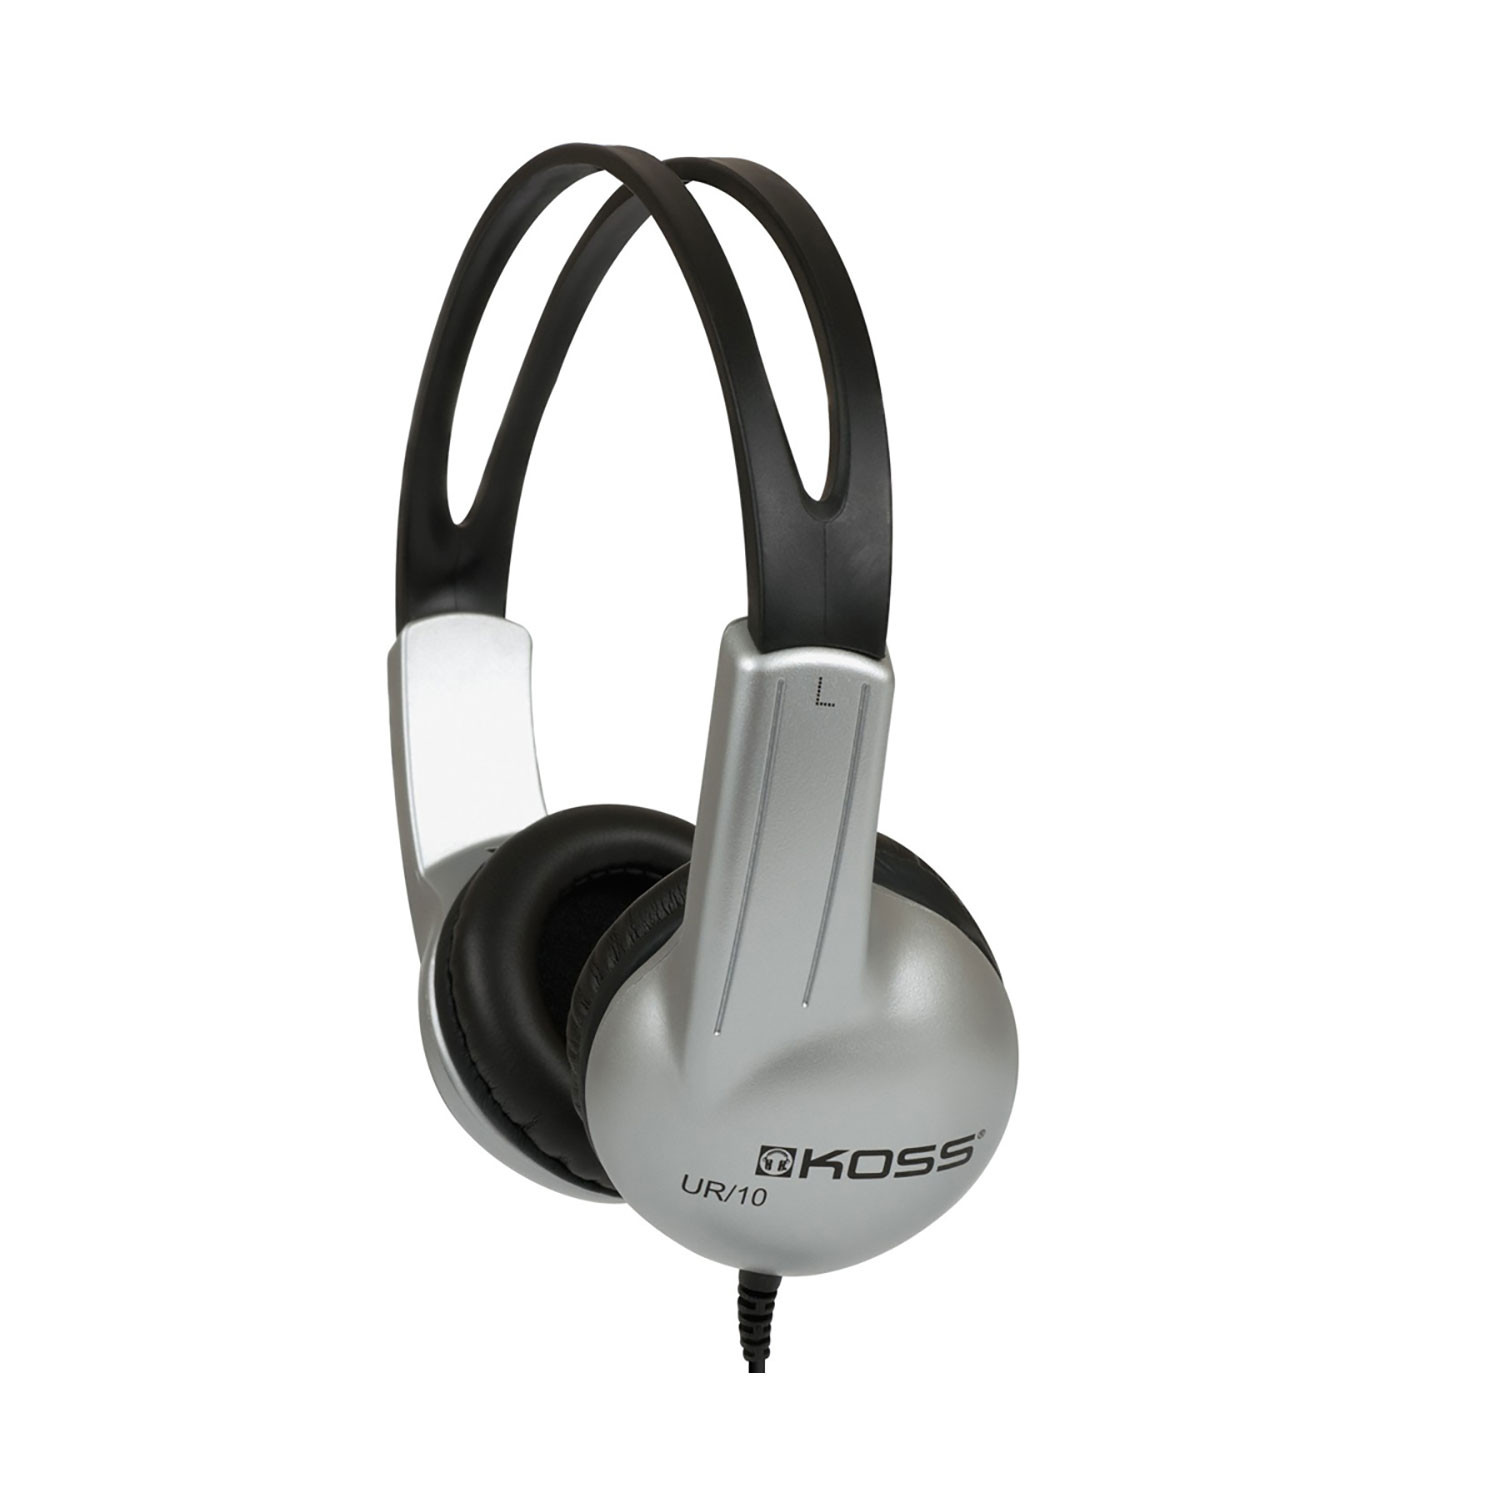 https://www.electroactiva.com/media/catalog/product/cache/1/image/9df78eab33525d08d6e5fb8d27136e95/k/o/koss-ur10-auriculares-con-cable-on-ear-headphones-002.jpg